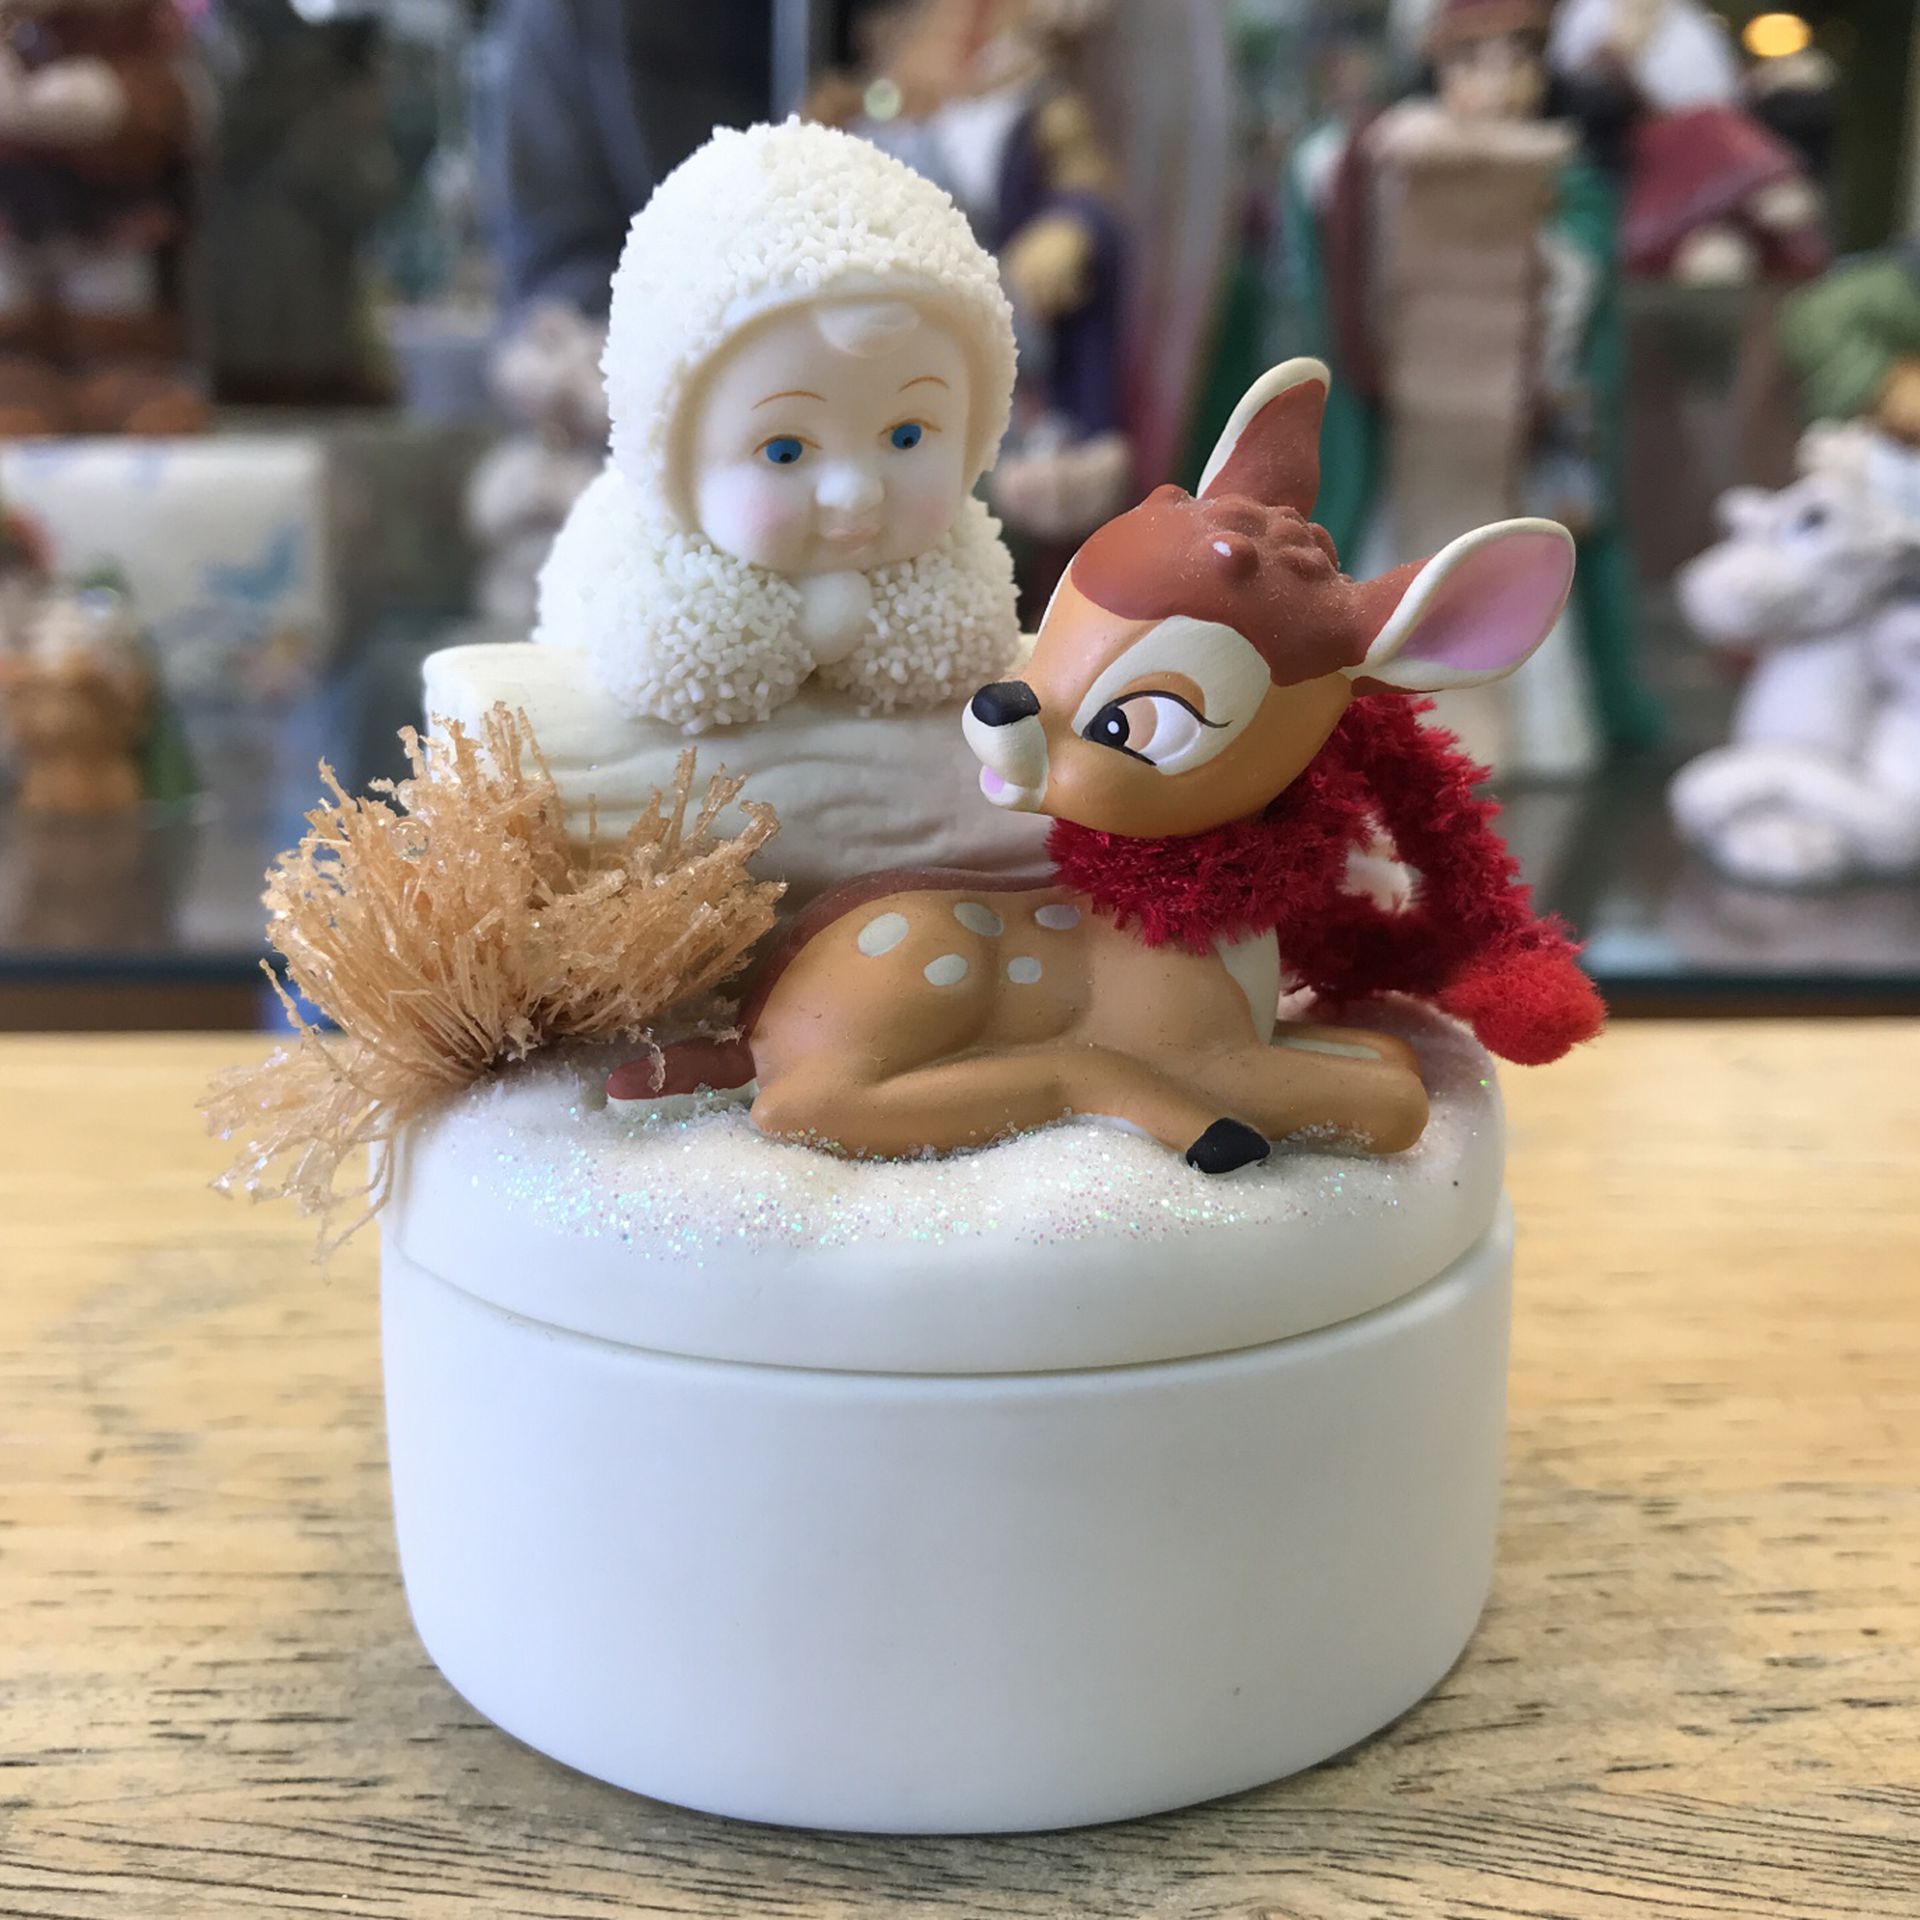 Snowbabies Winter Bambi Jewelry Box Department 56 Valentine’s Day Gift Present